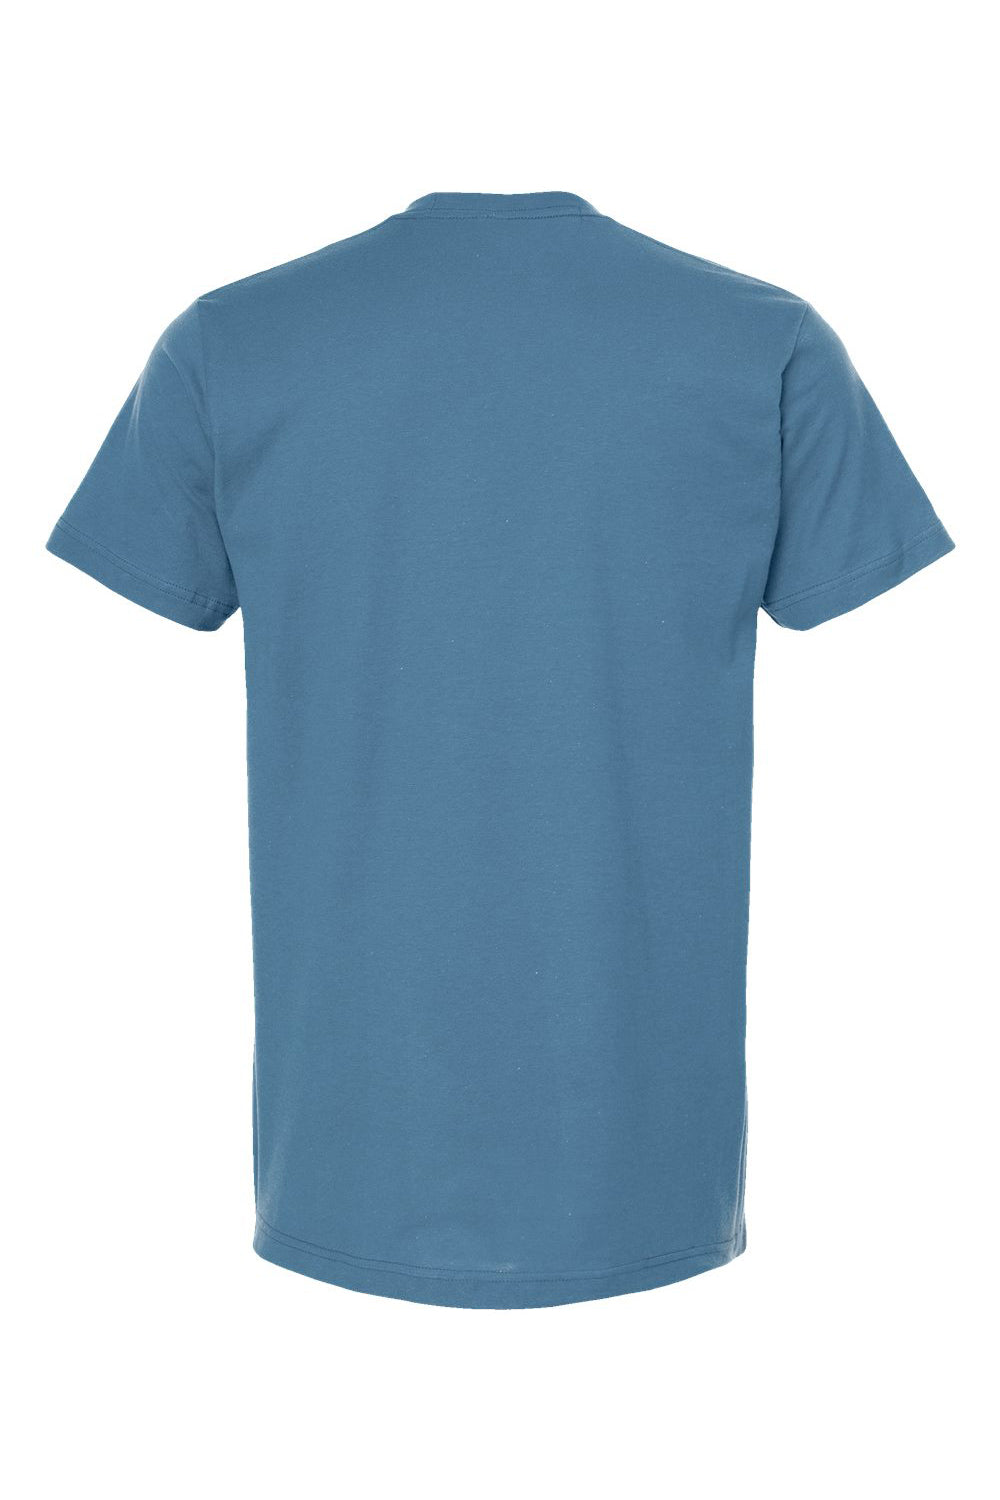 Tultex 202 Mens Fine Jersey Short Sleeve Crewneck T-Shirt Slate Blue Flat Back